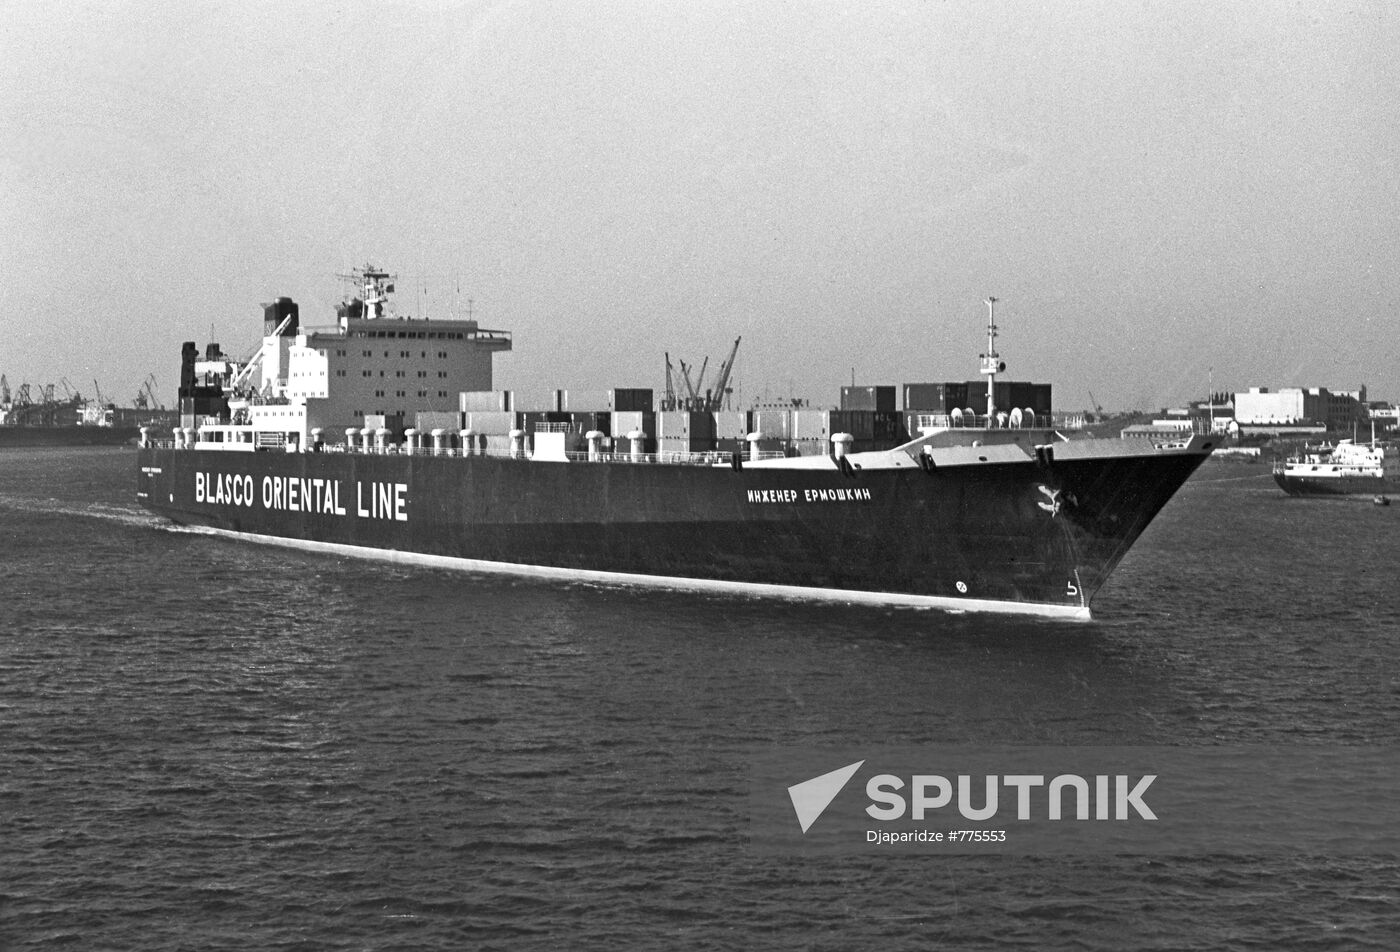 The Engineer Yermoshkin motor ship